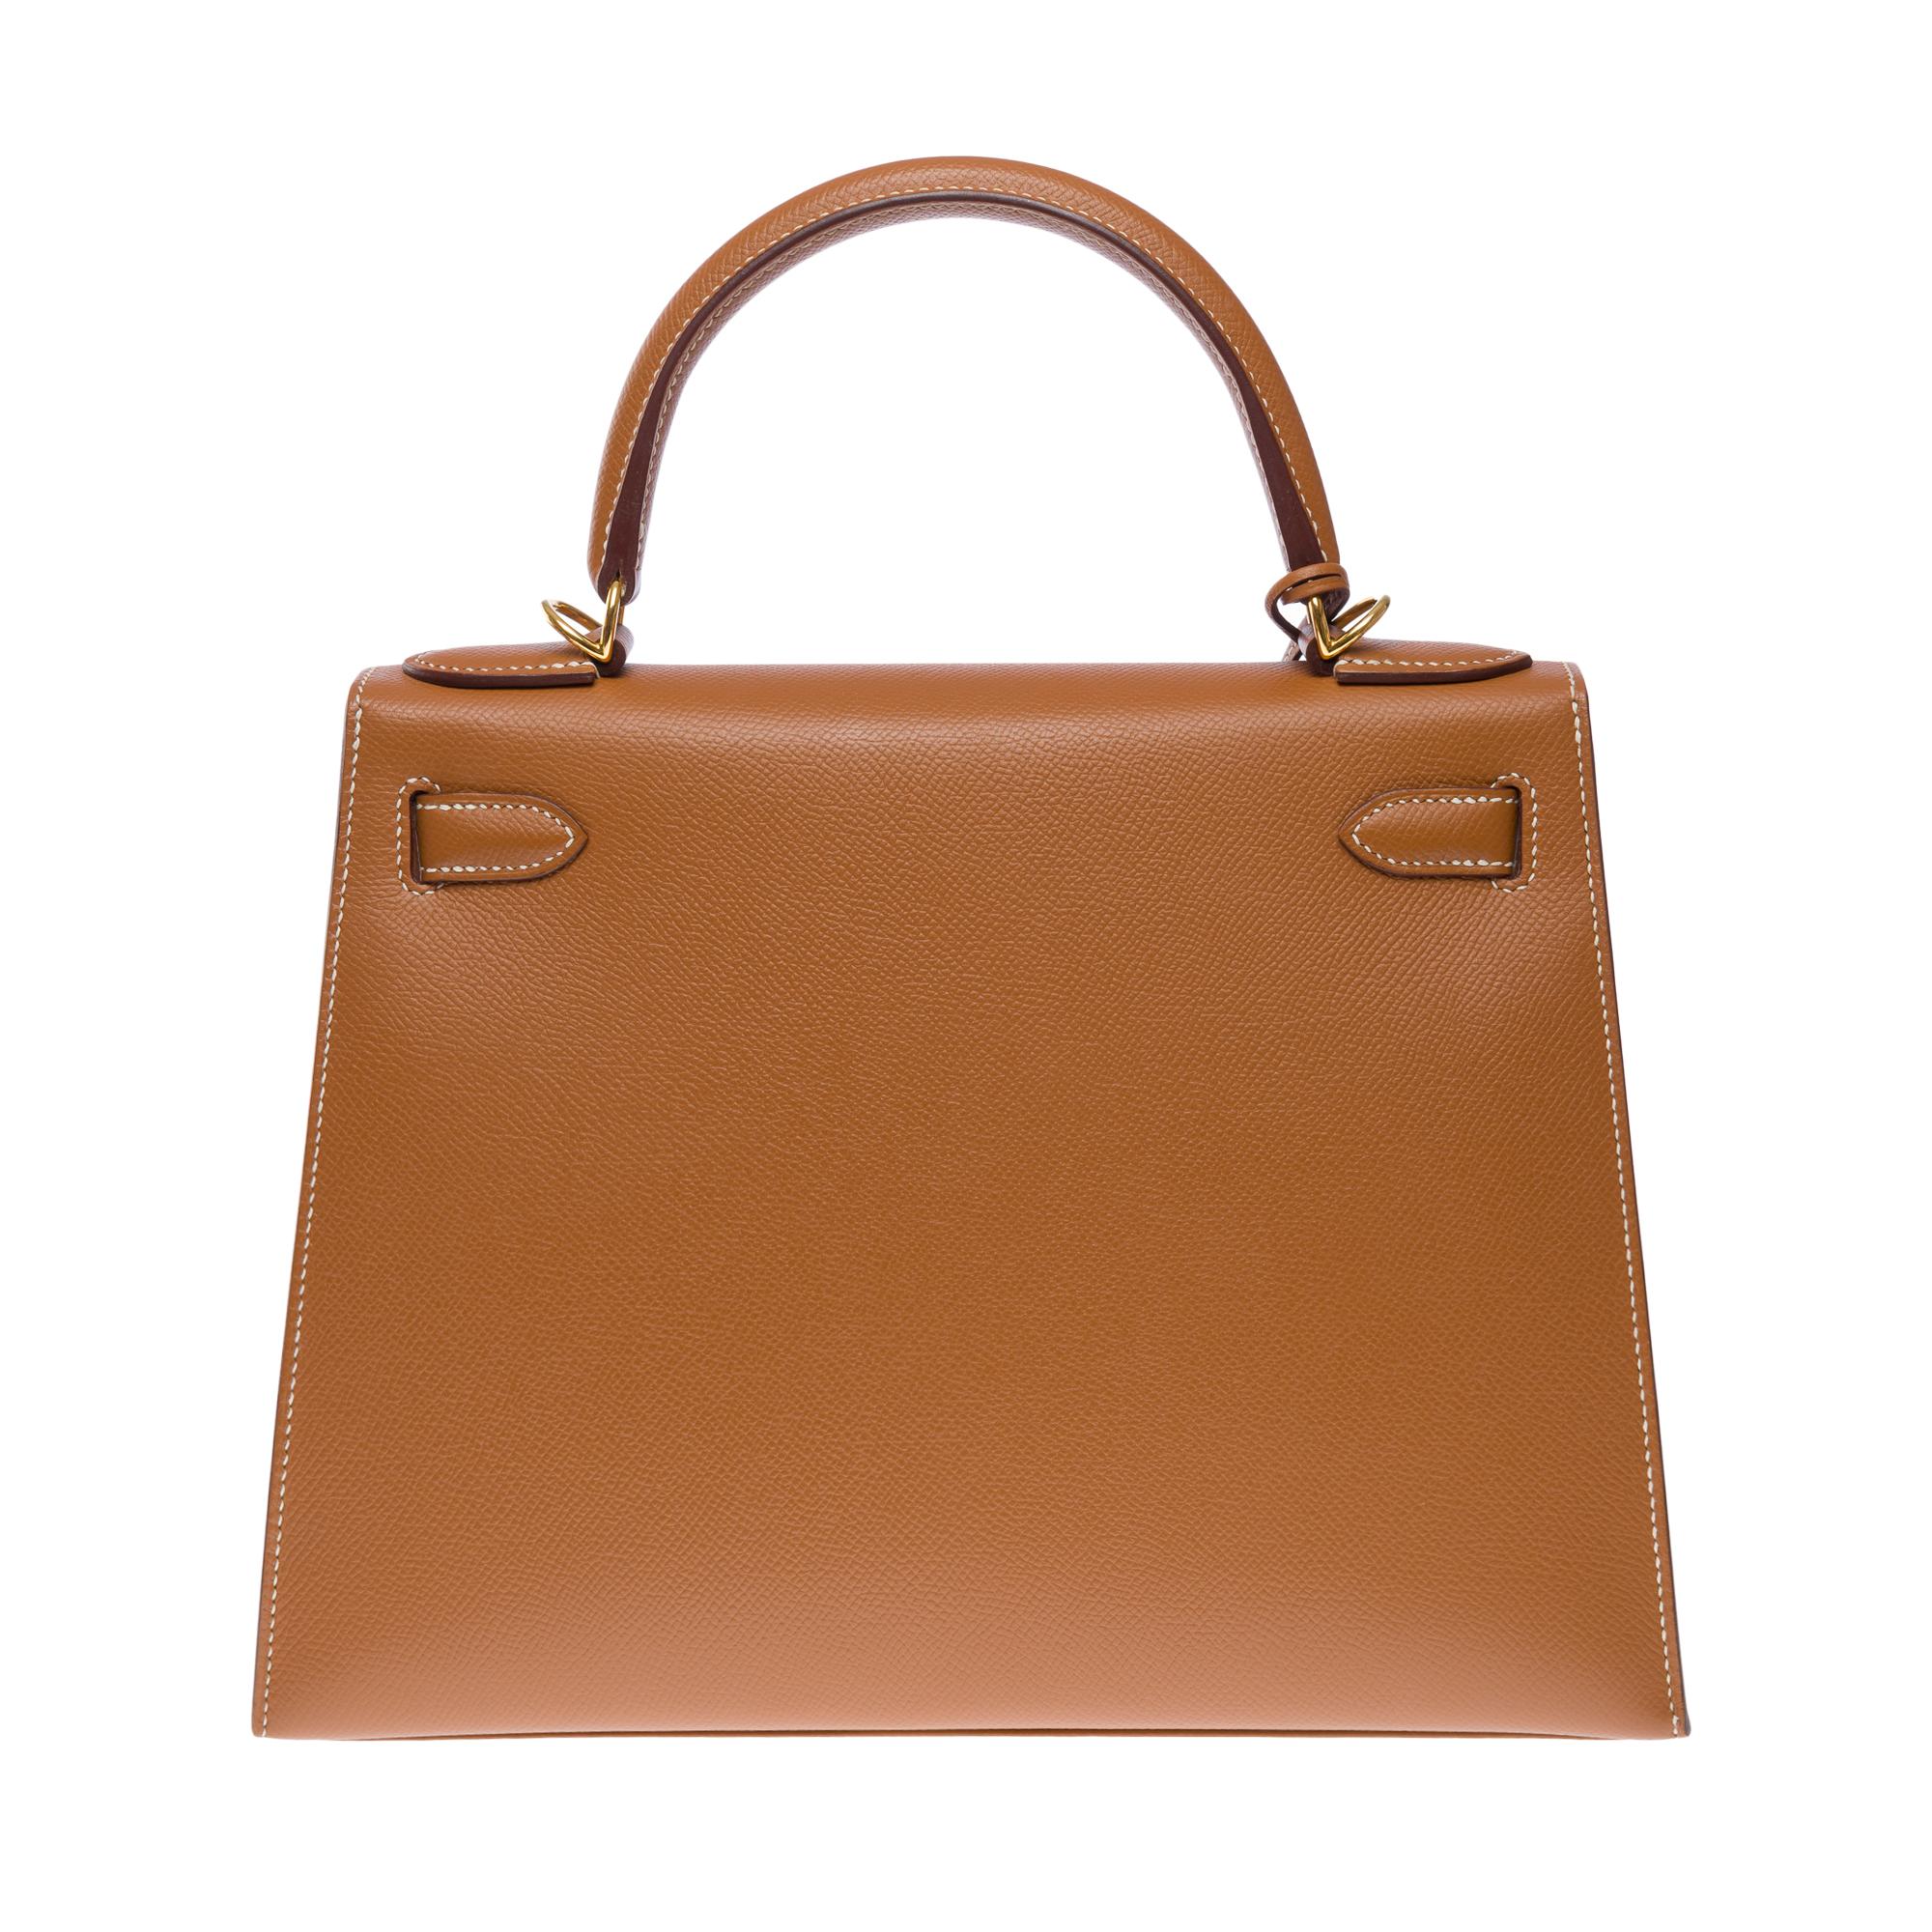 Women's Amazing Hermès Kelly 28 sellier handbag strap in Camel/Gold Epsom leather, GHW